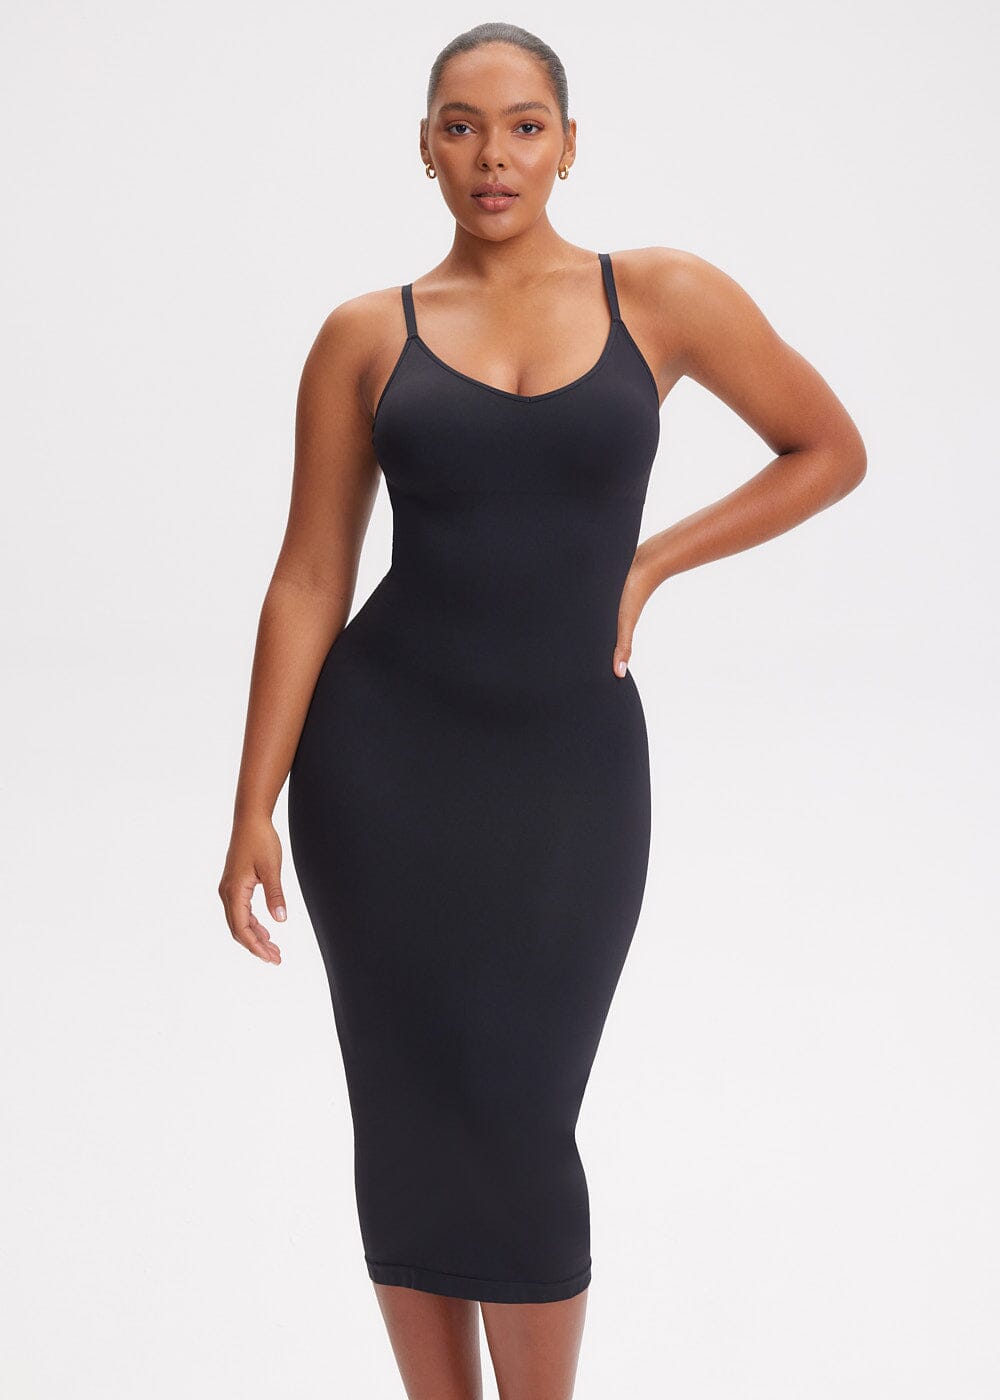 beautiful niihai black shapewear dress size xxs only - Depop